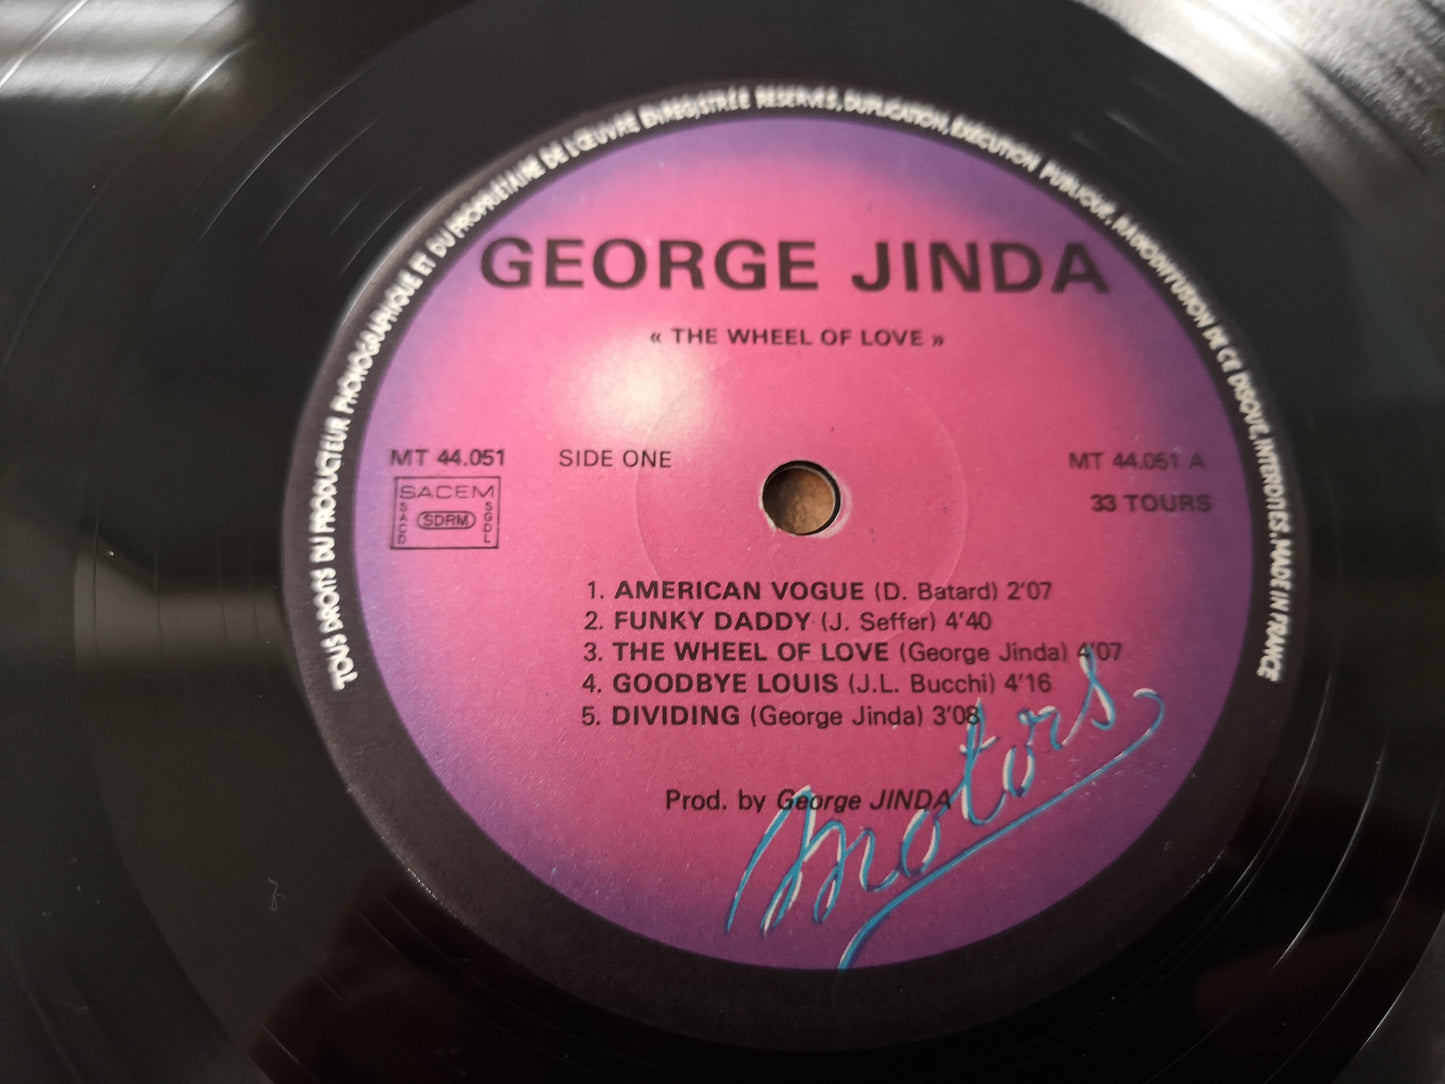 George Jinda "The Wheel of Love" Orig France 1975 VG/VG++ (Jazz Rock Fusion)